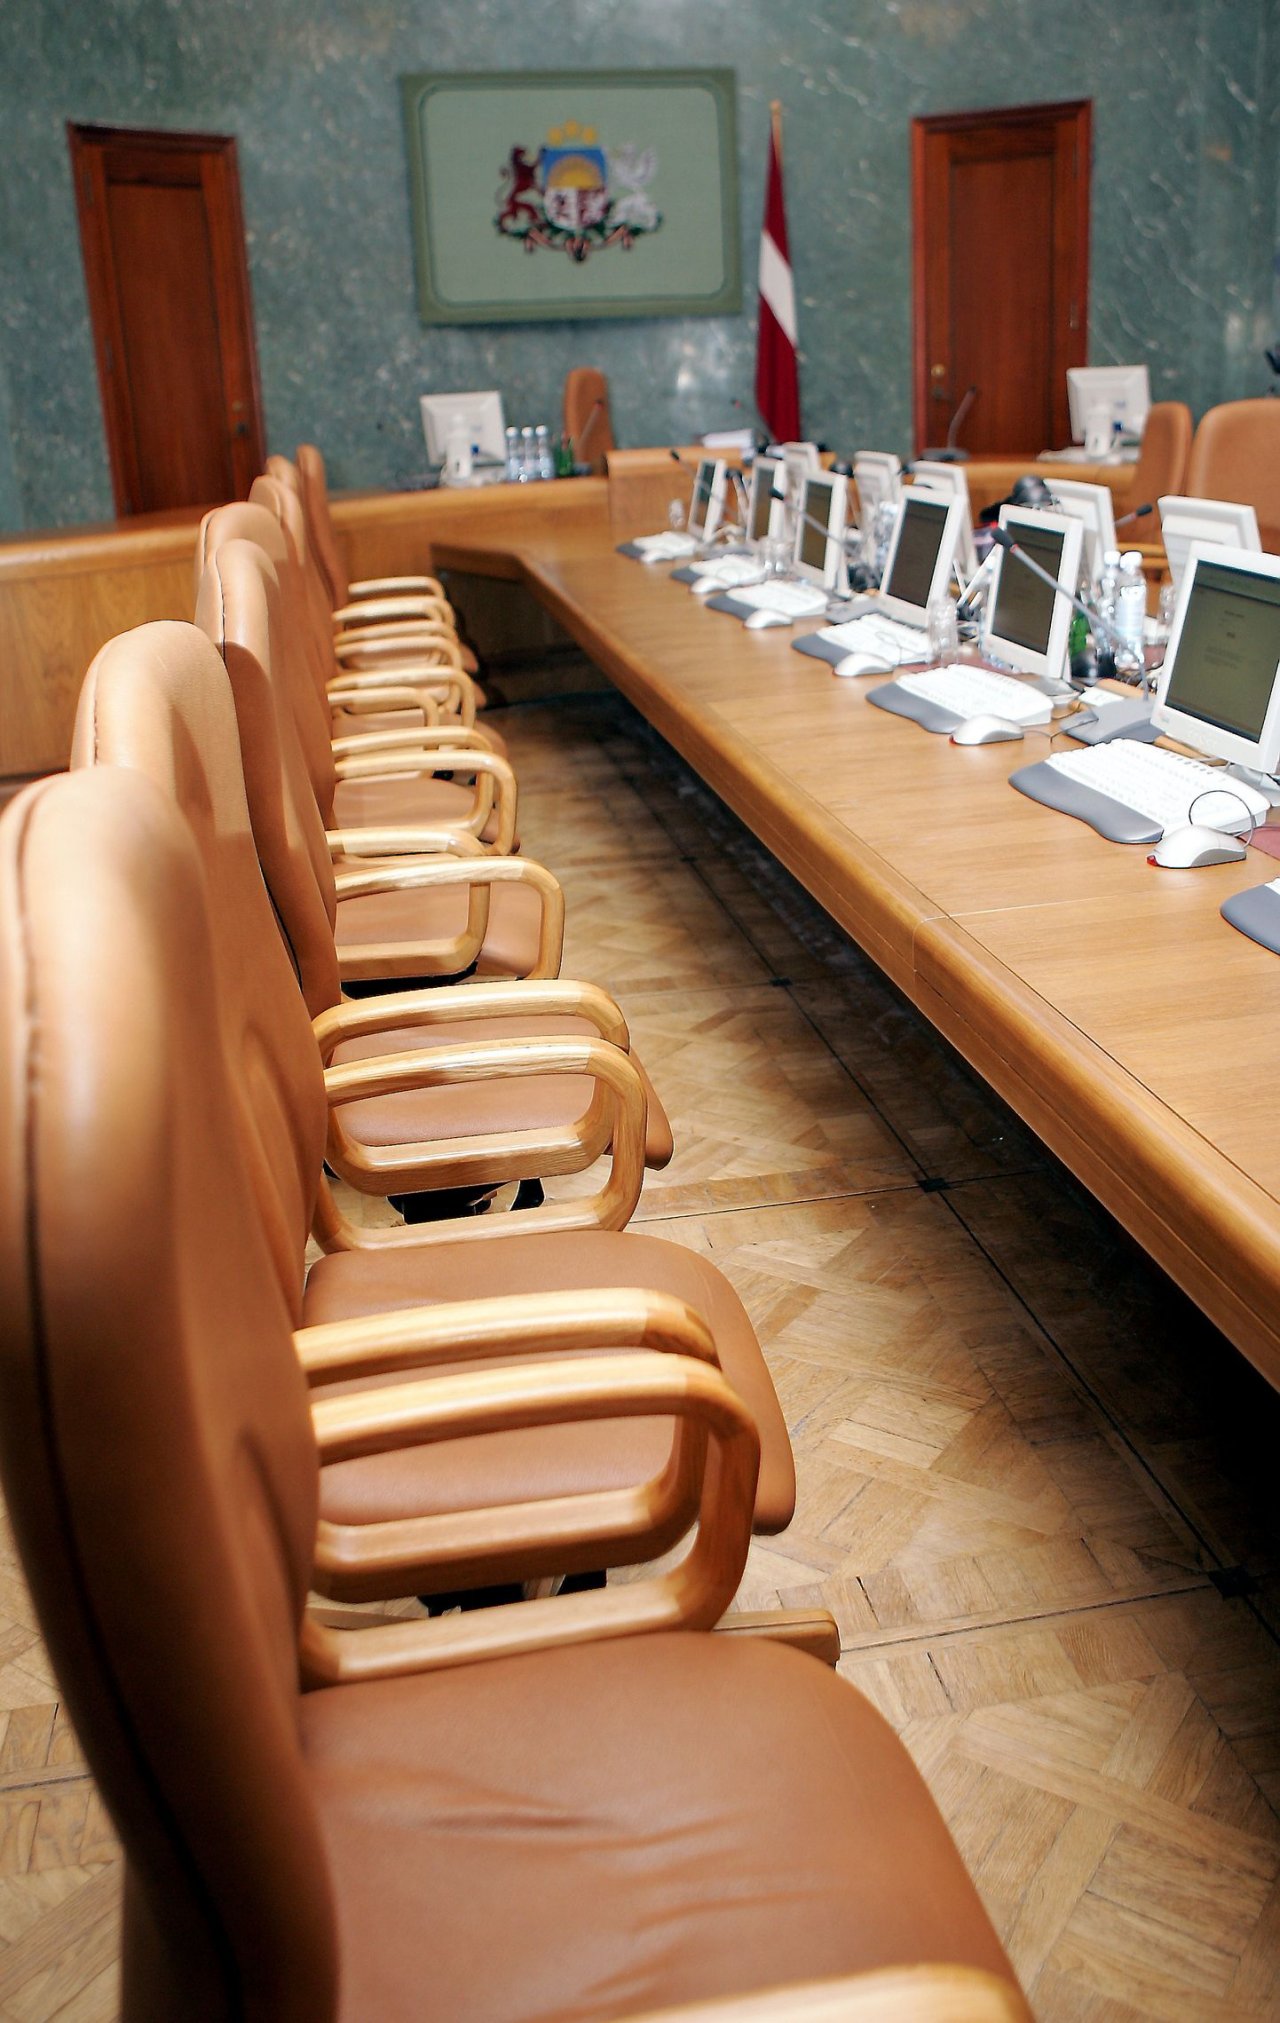 Attēls: Ministru kabineta telpa, krēslu rinda